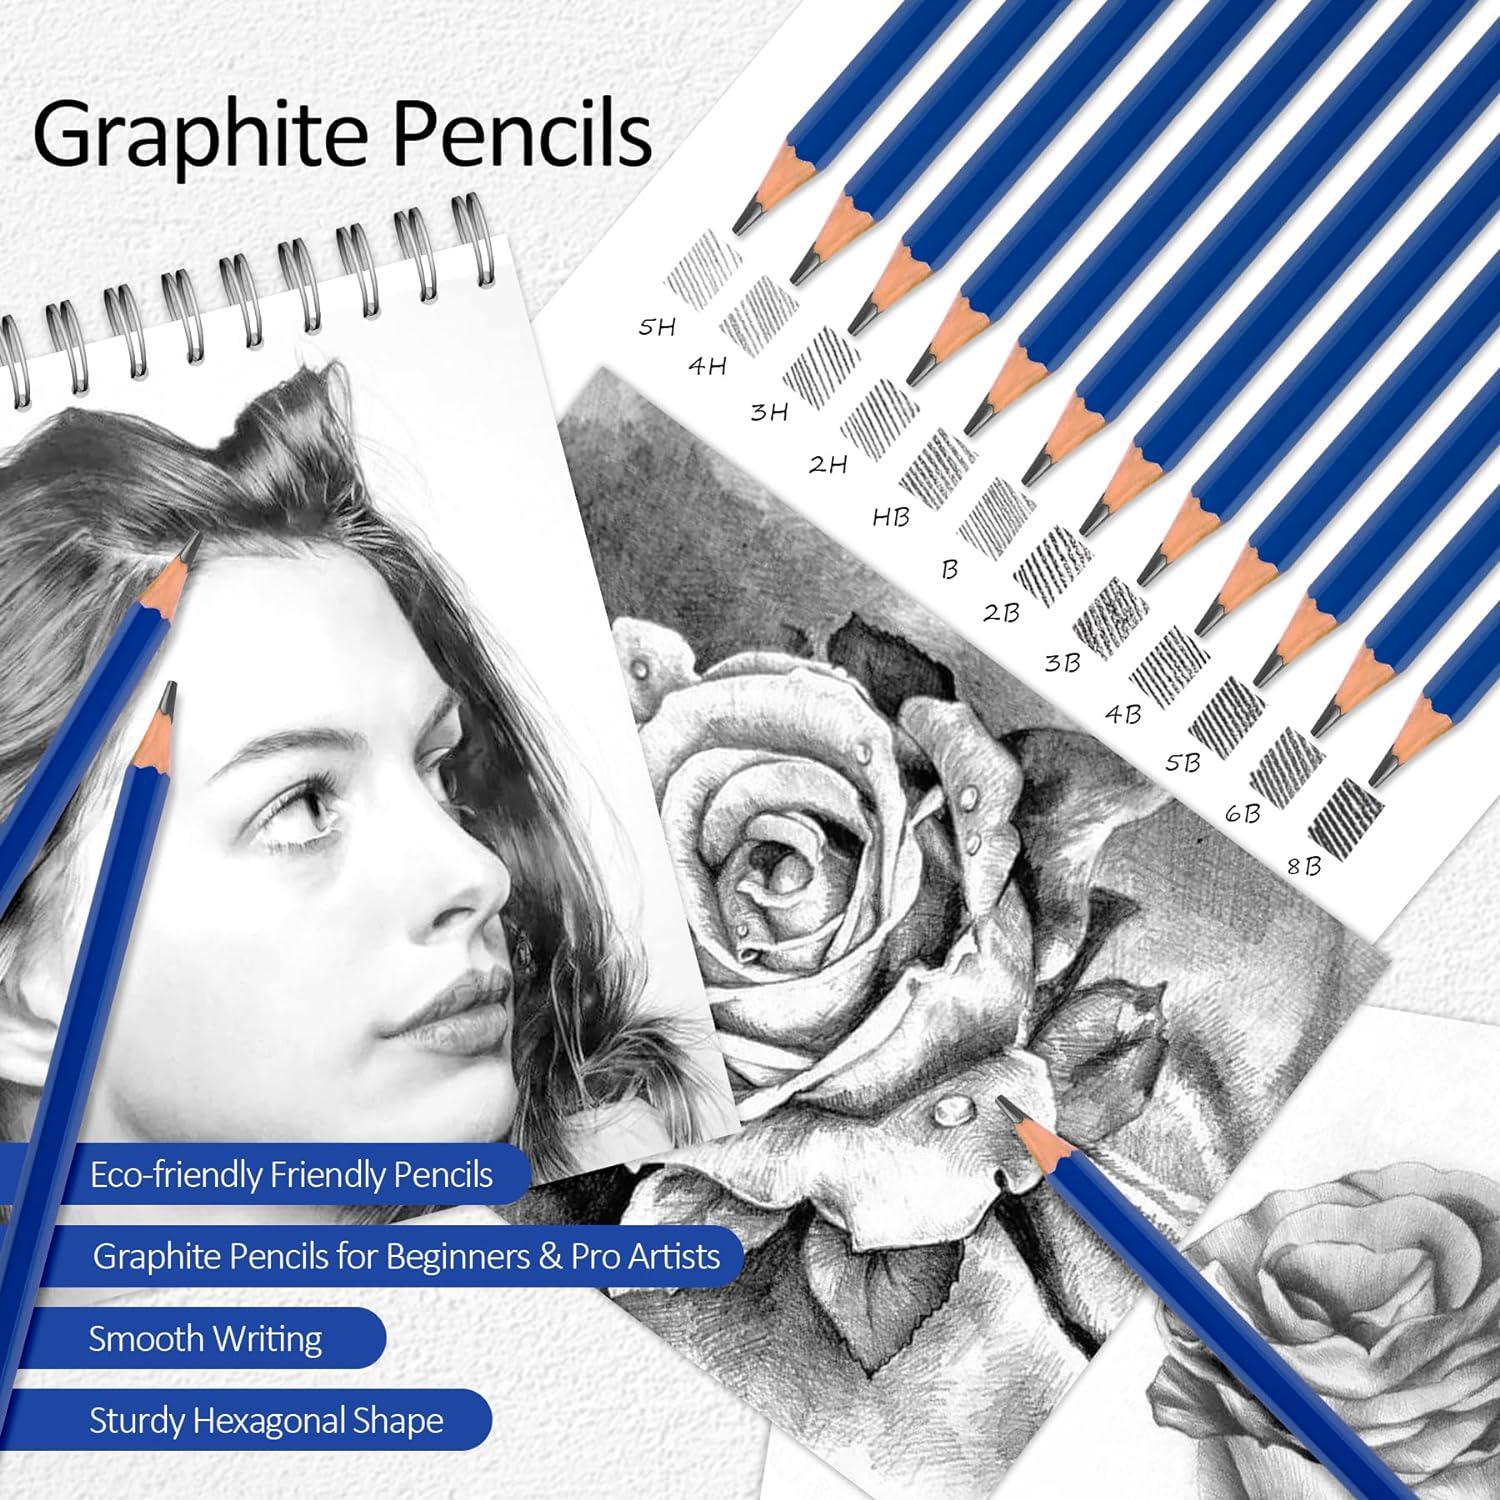 KALOUR 33 Pieces Pro Drawing Kit Sketching Pencils Set,Portable Zippered Travel Case-Charcoal Pencils, Sketch Pencils, Charcoal Stick,Sharpener